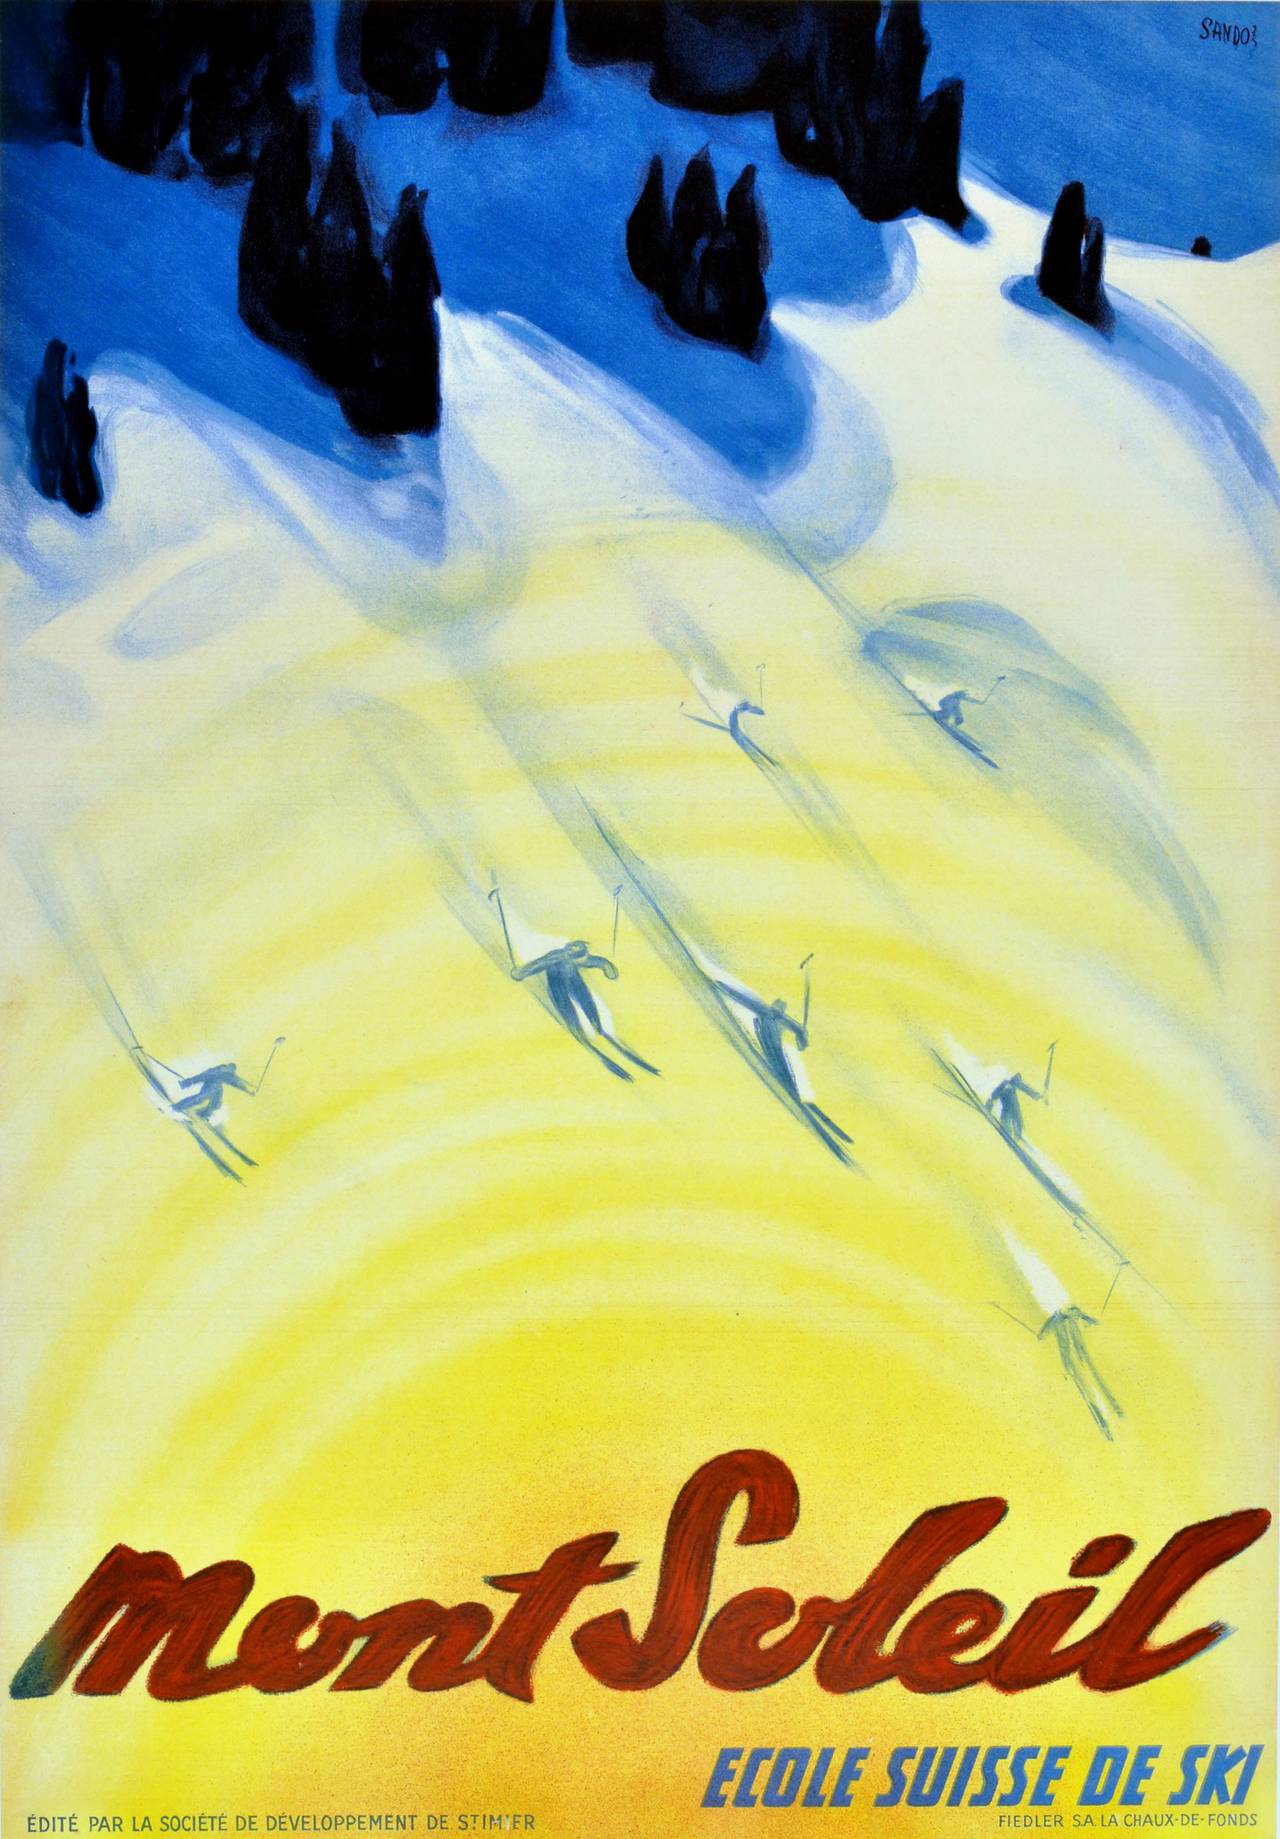 Henry Sandoz Print - Original 1940s Skiing Poster: Mont Soleil Ecole Suisse De Ski (Swiss Ski School)